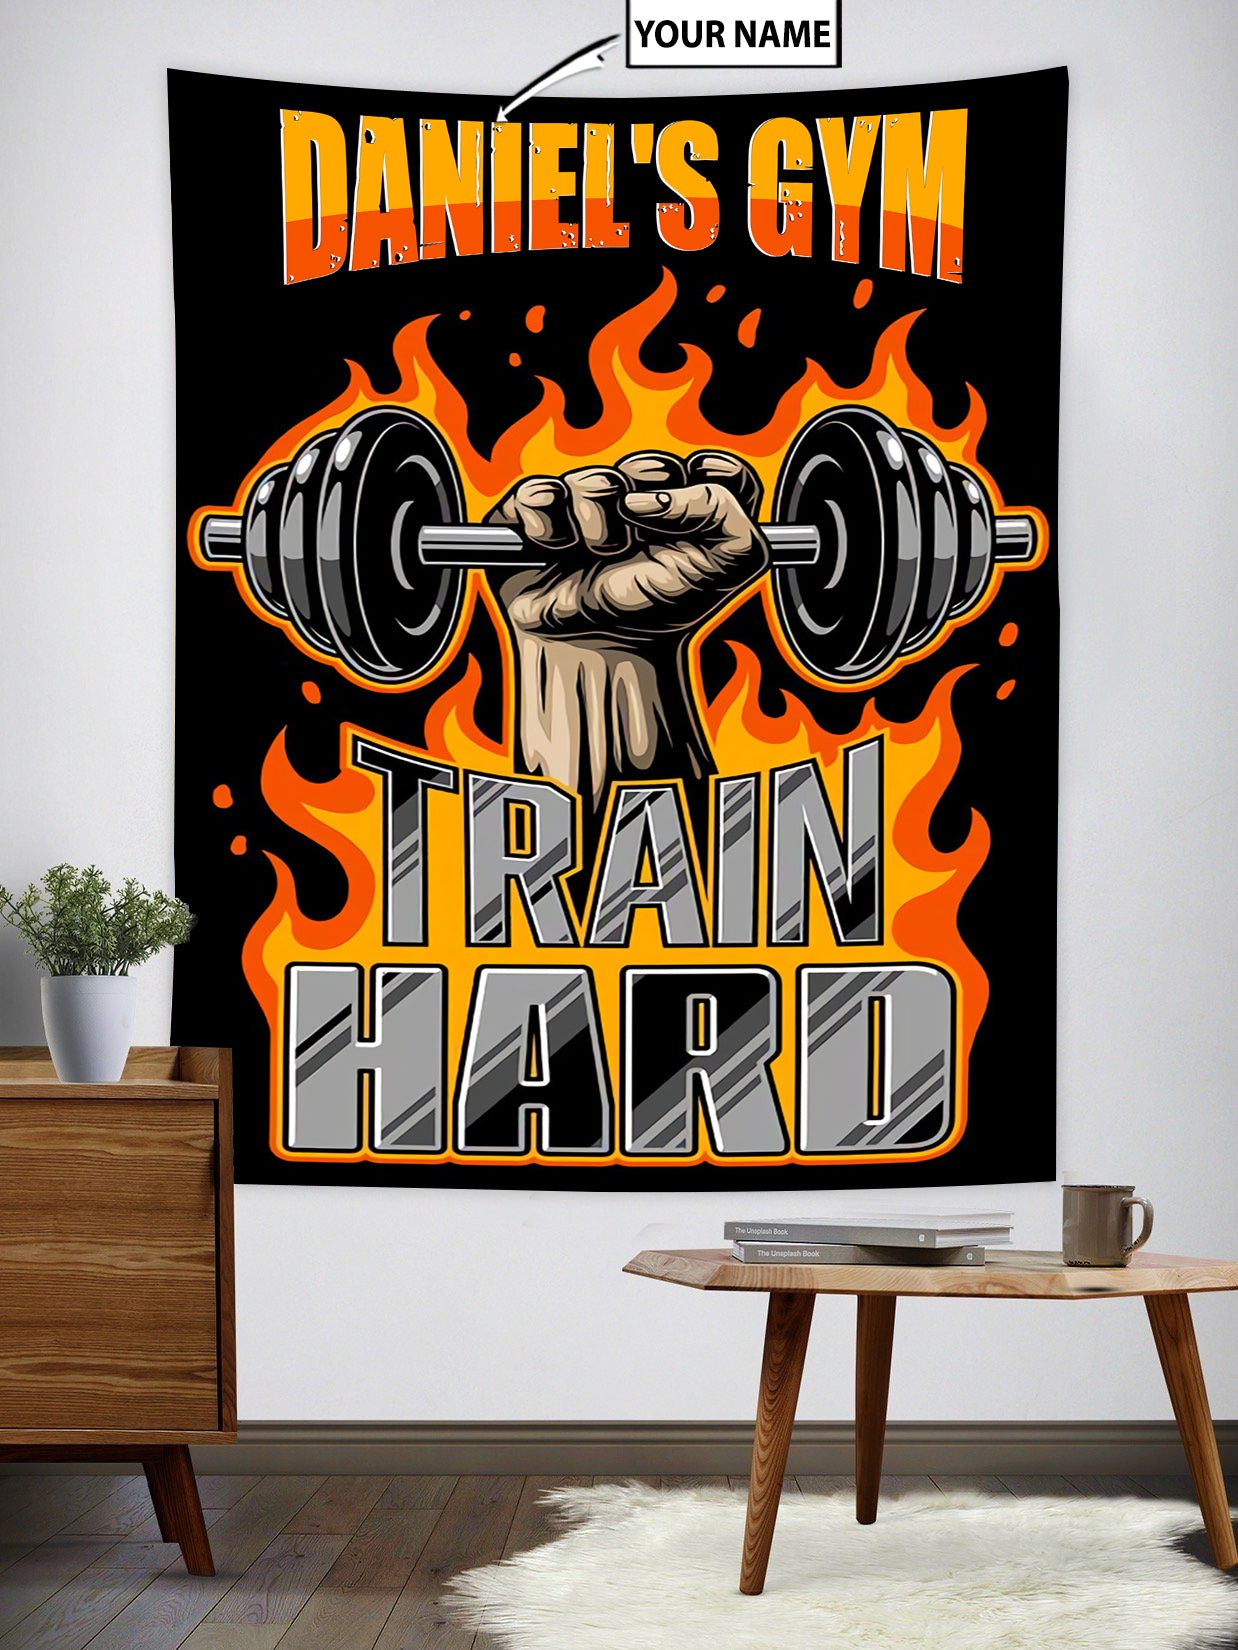 Your Name Custom Banner Home Gym Decor Garage Training Inspirational - 4